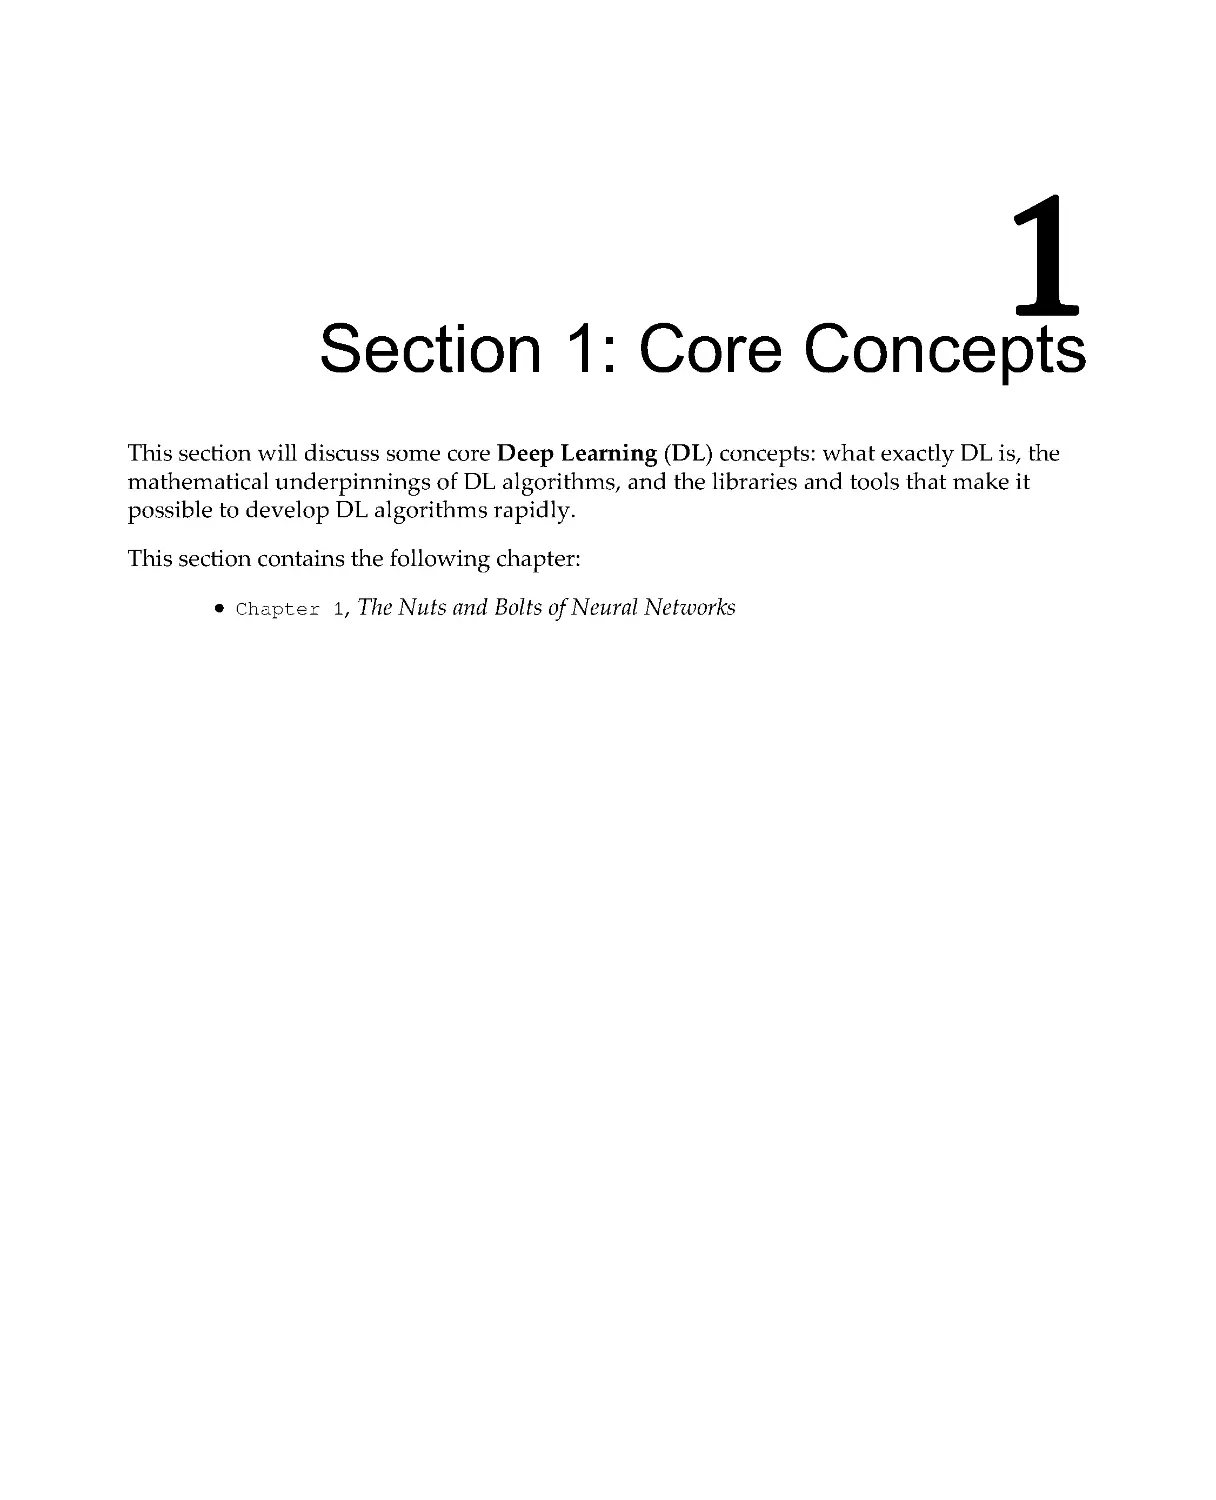 Section 1: Core Concepts